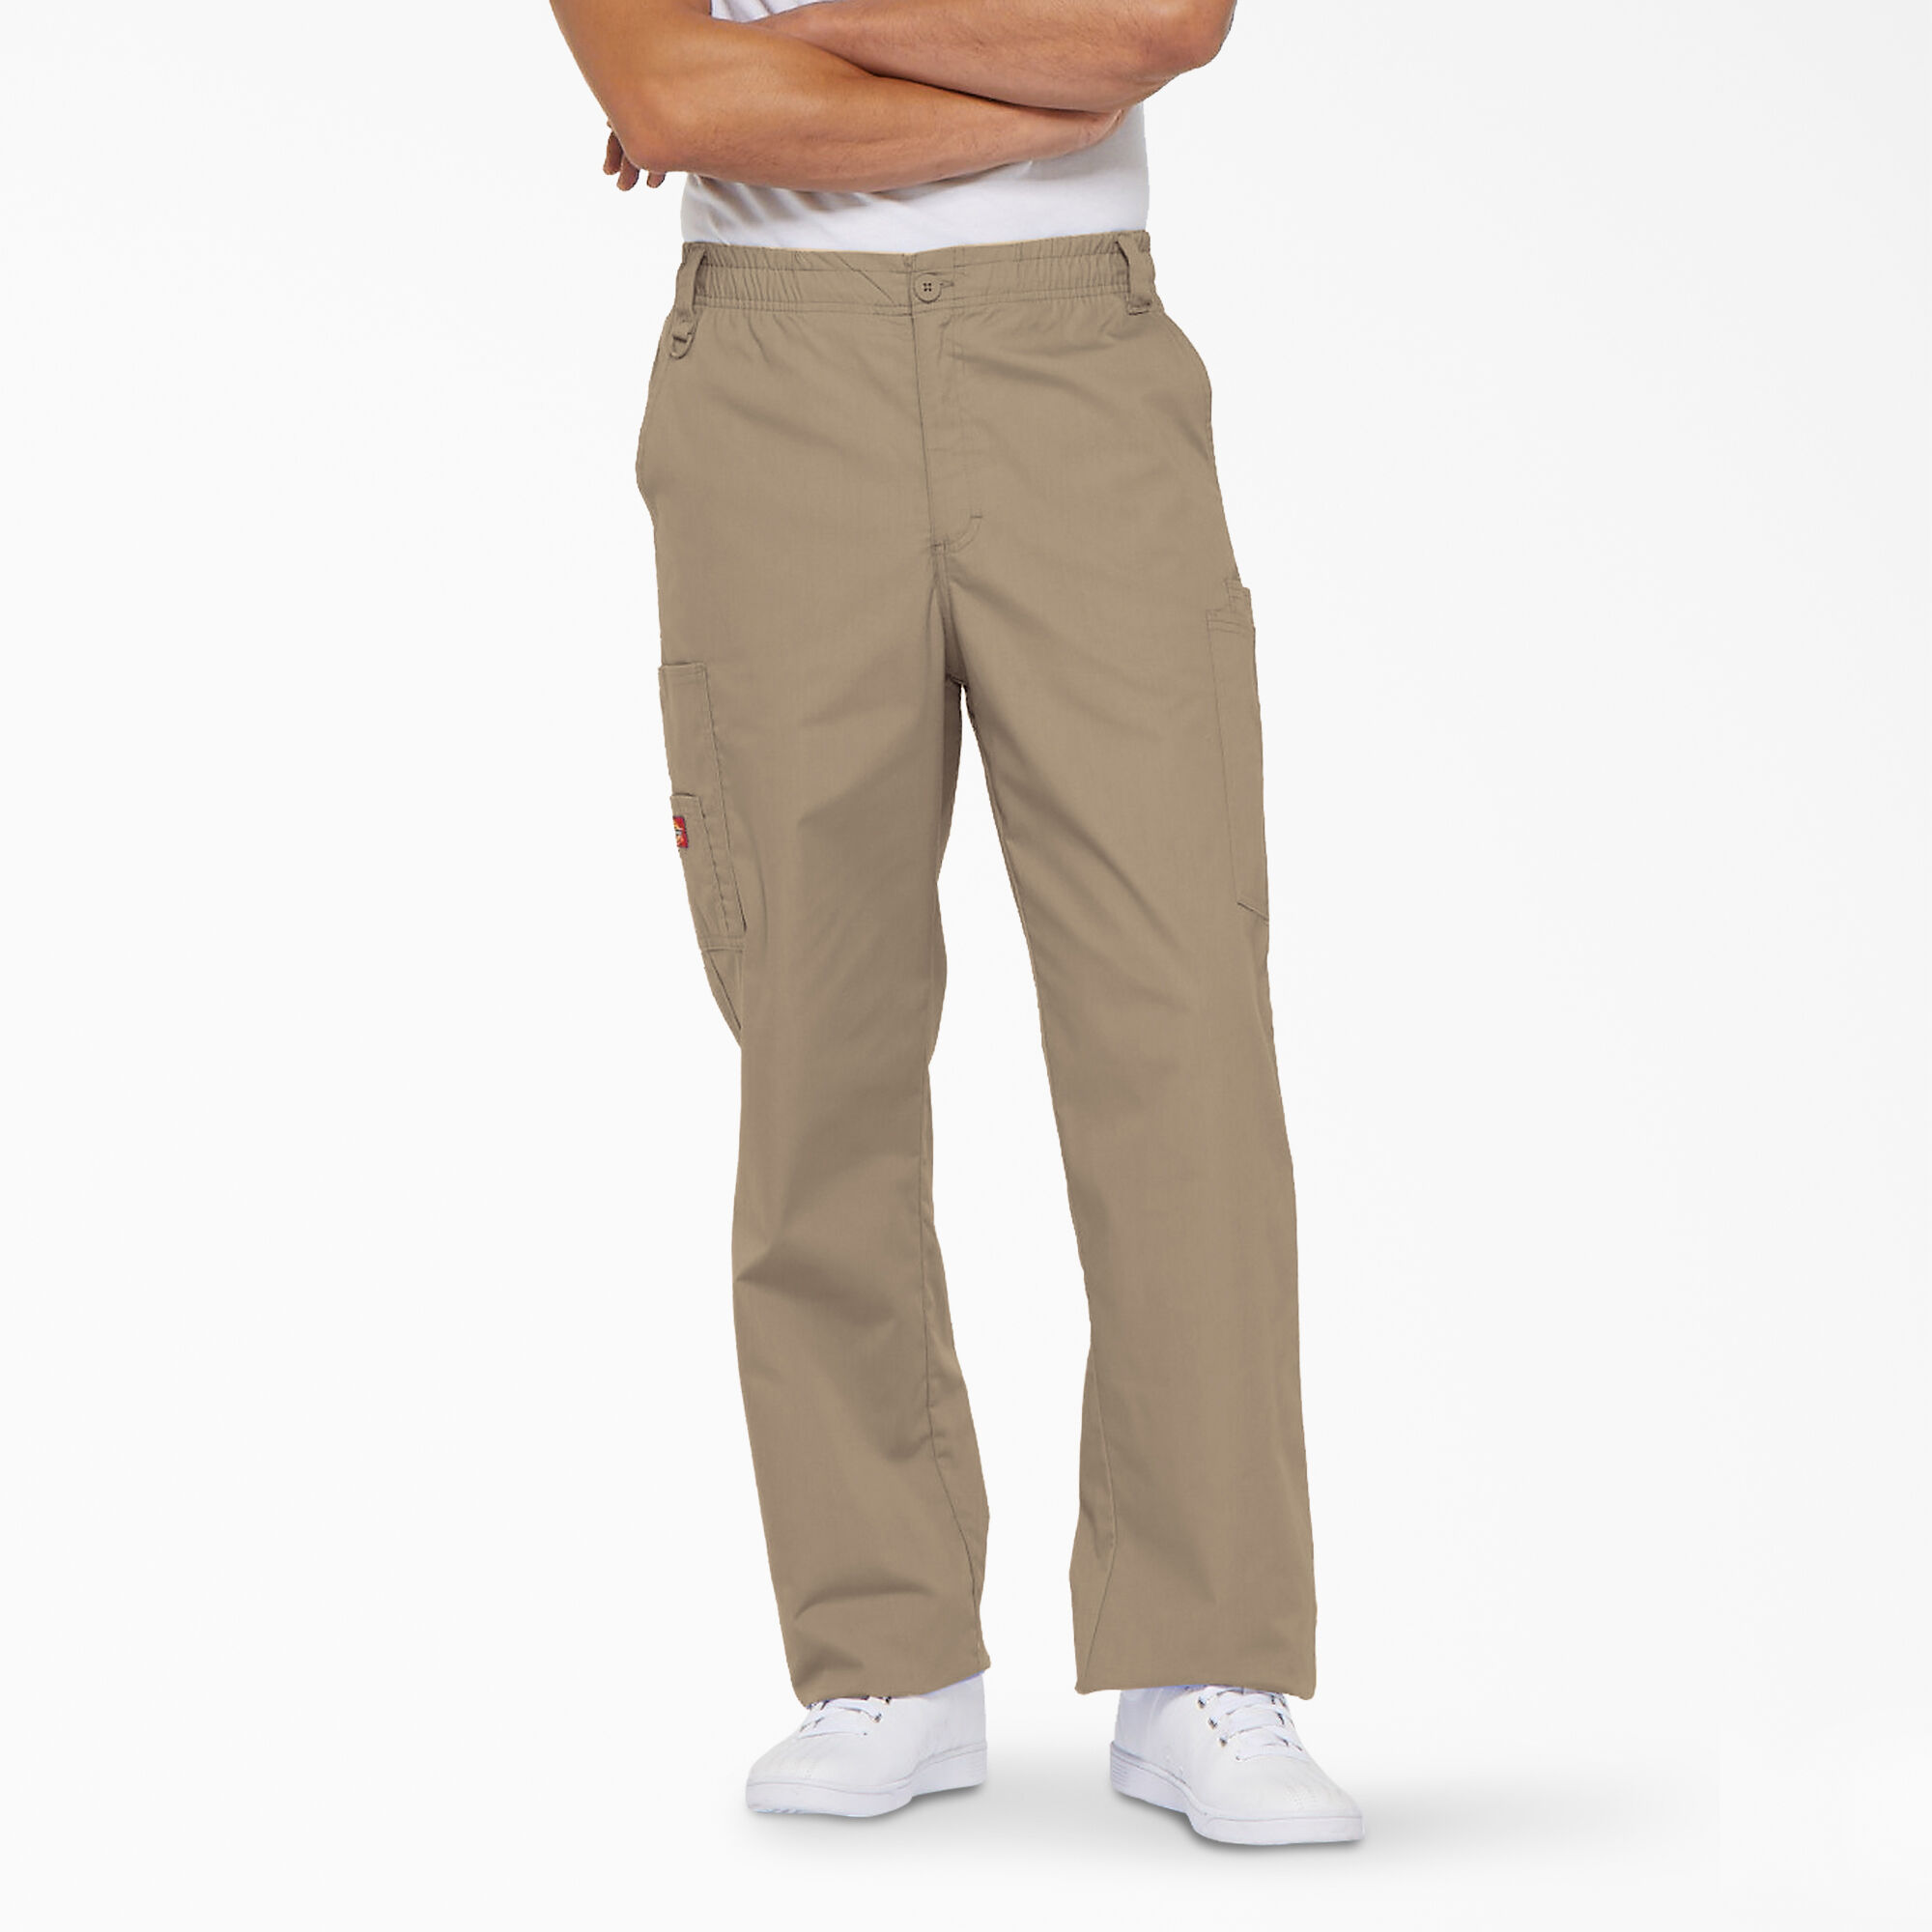 mens elastic waist khaki pants